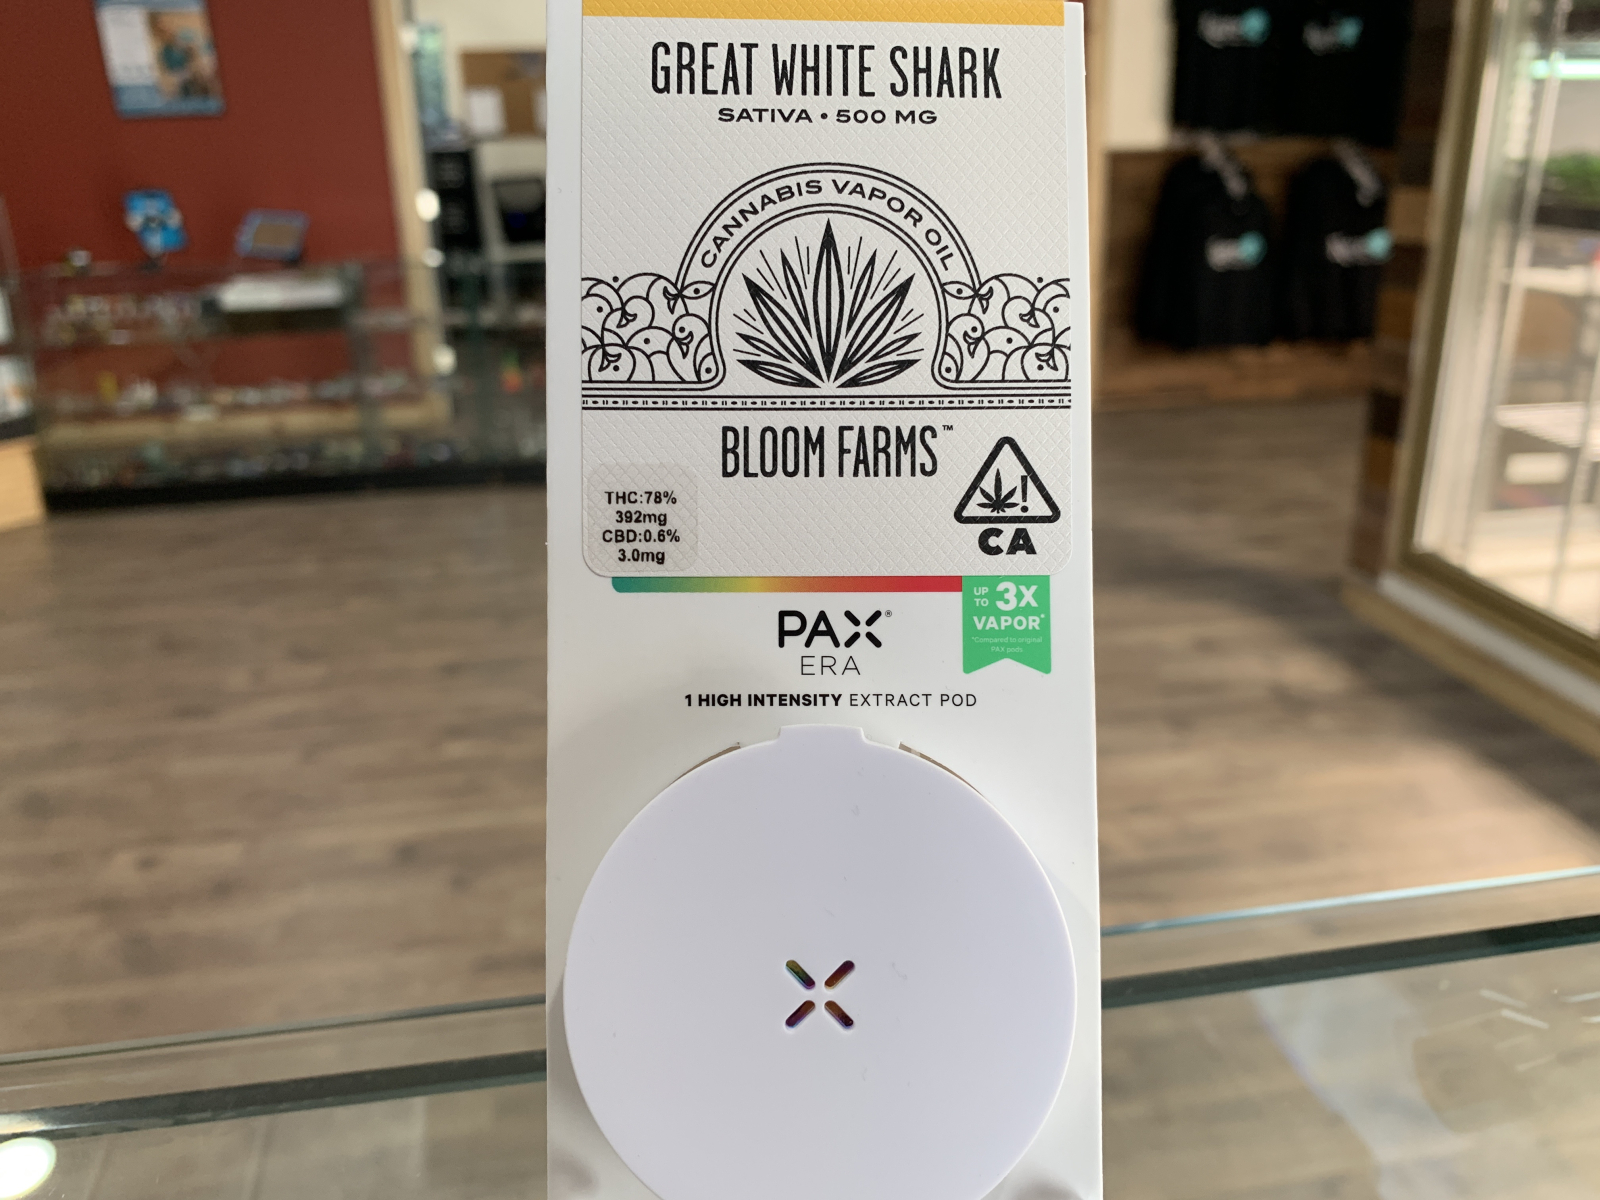 Bloomfarms great white shark pax pod